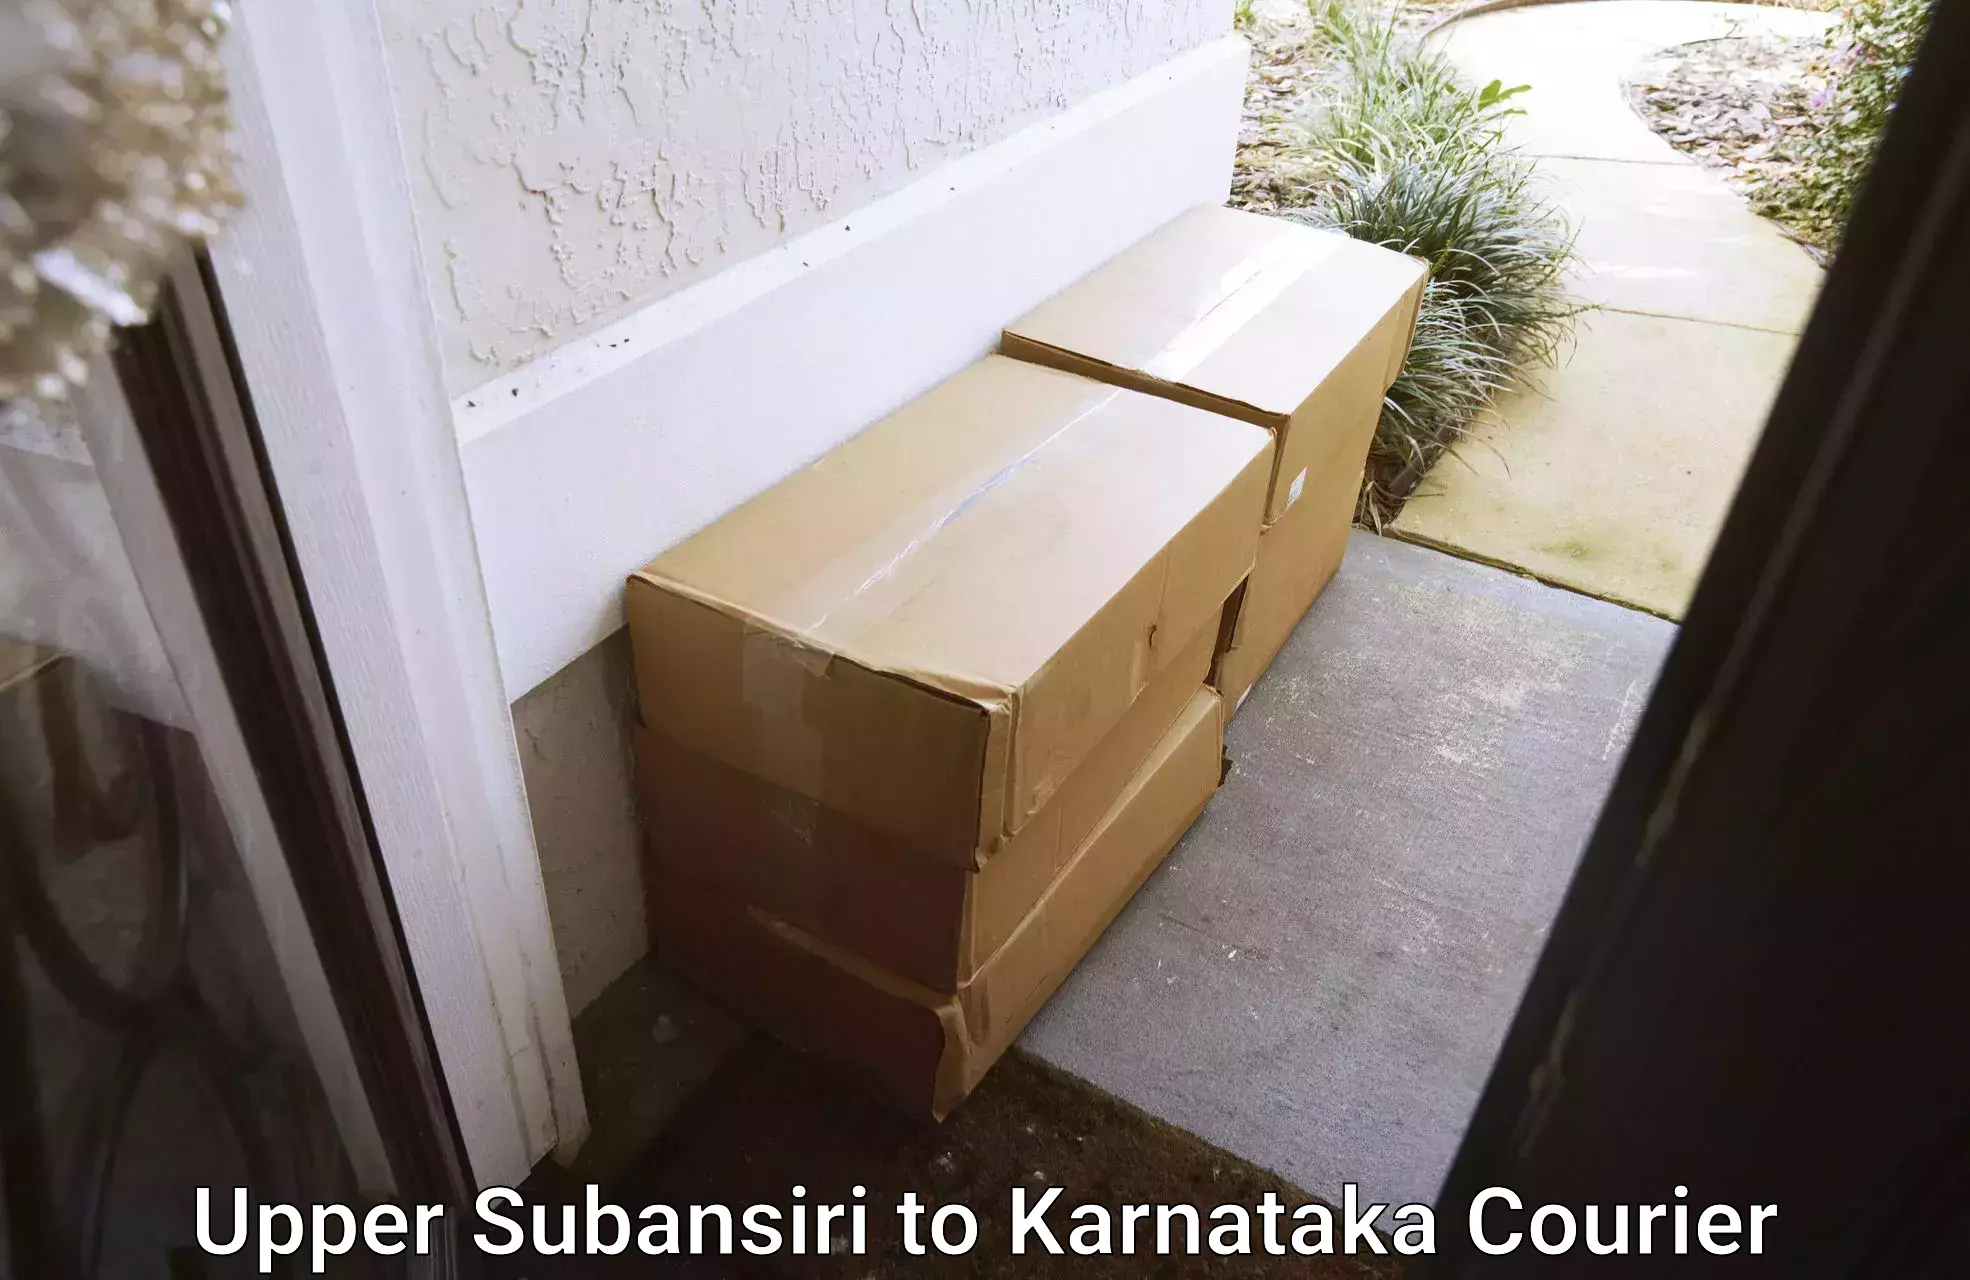 User-friendly courier app Upper Subansiri to Karnataka